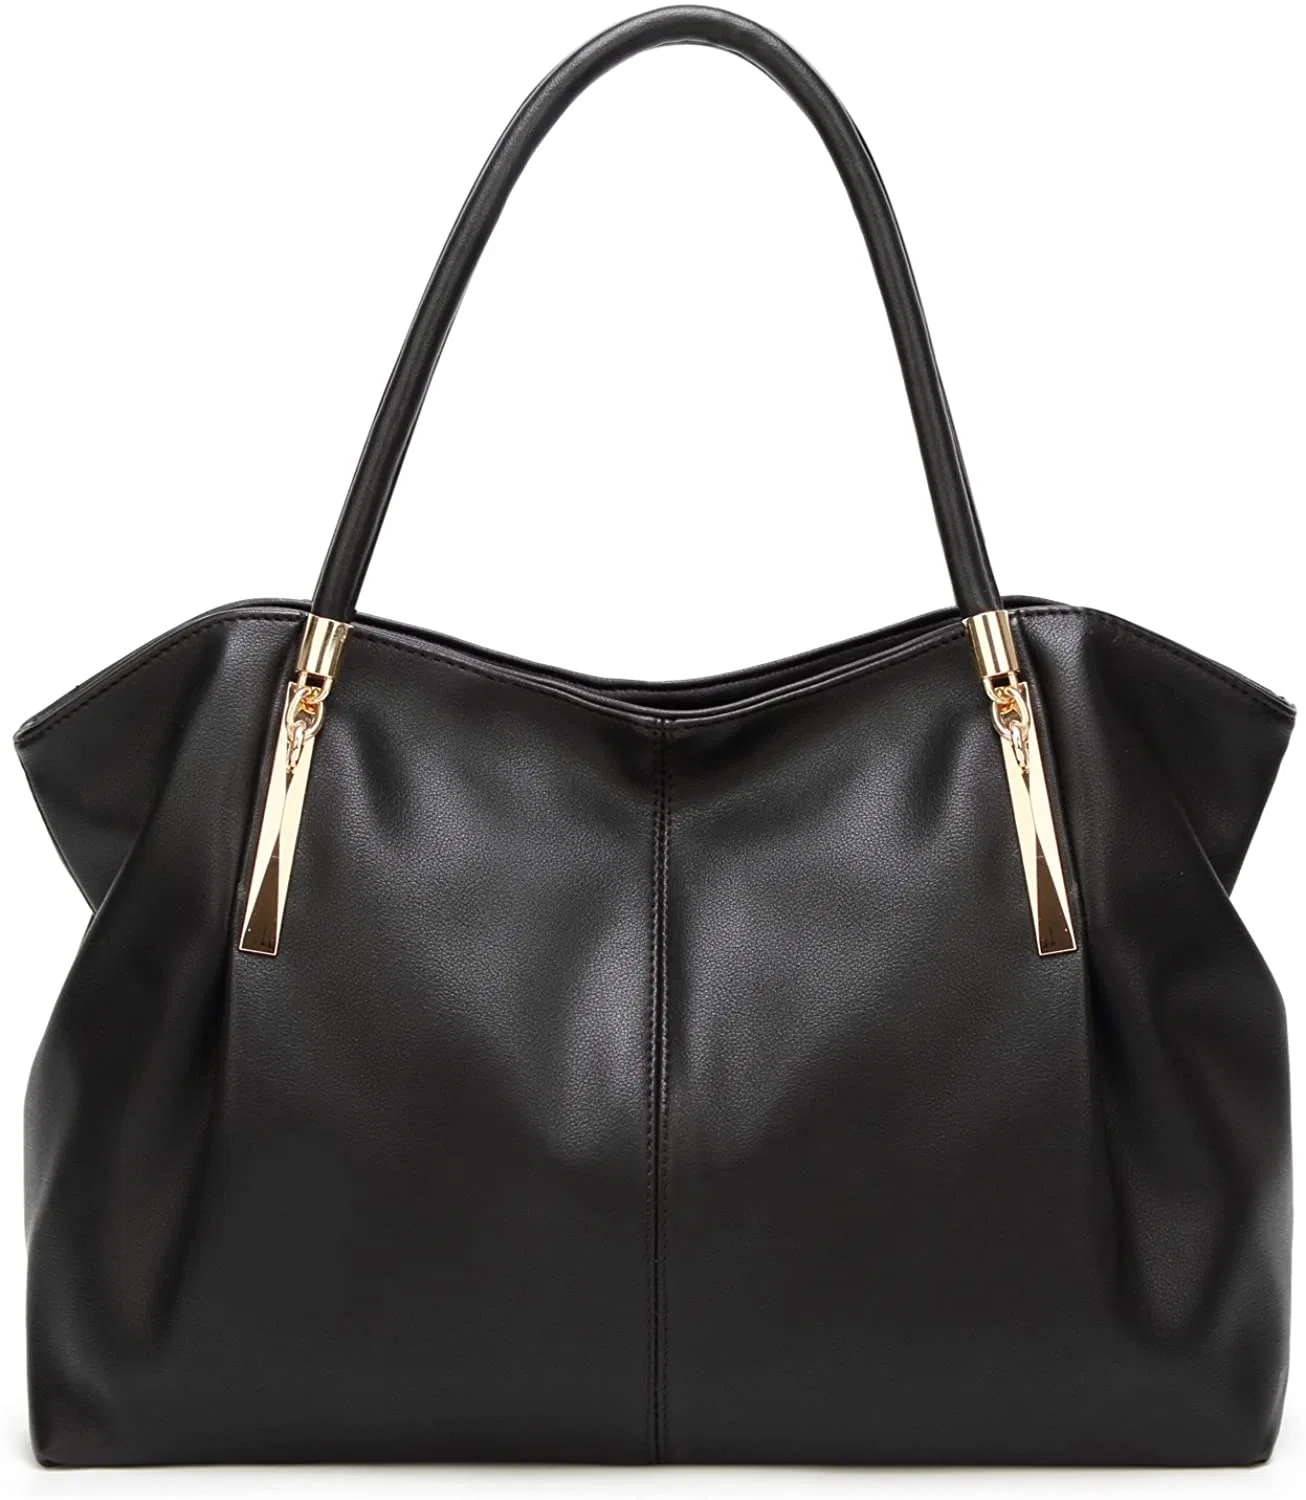 PU Leather Ladies Satchel Tote Bag Shoulder Bags Handbags for Women